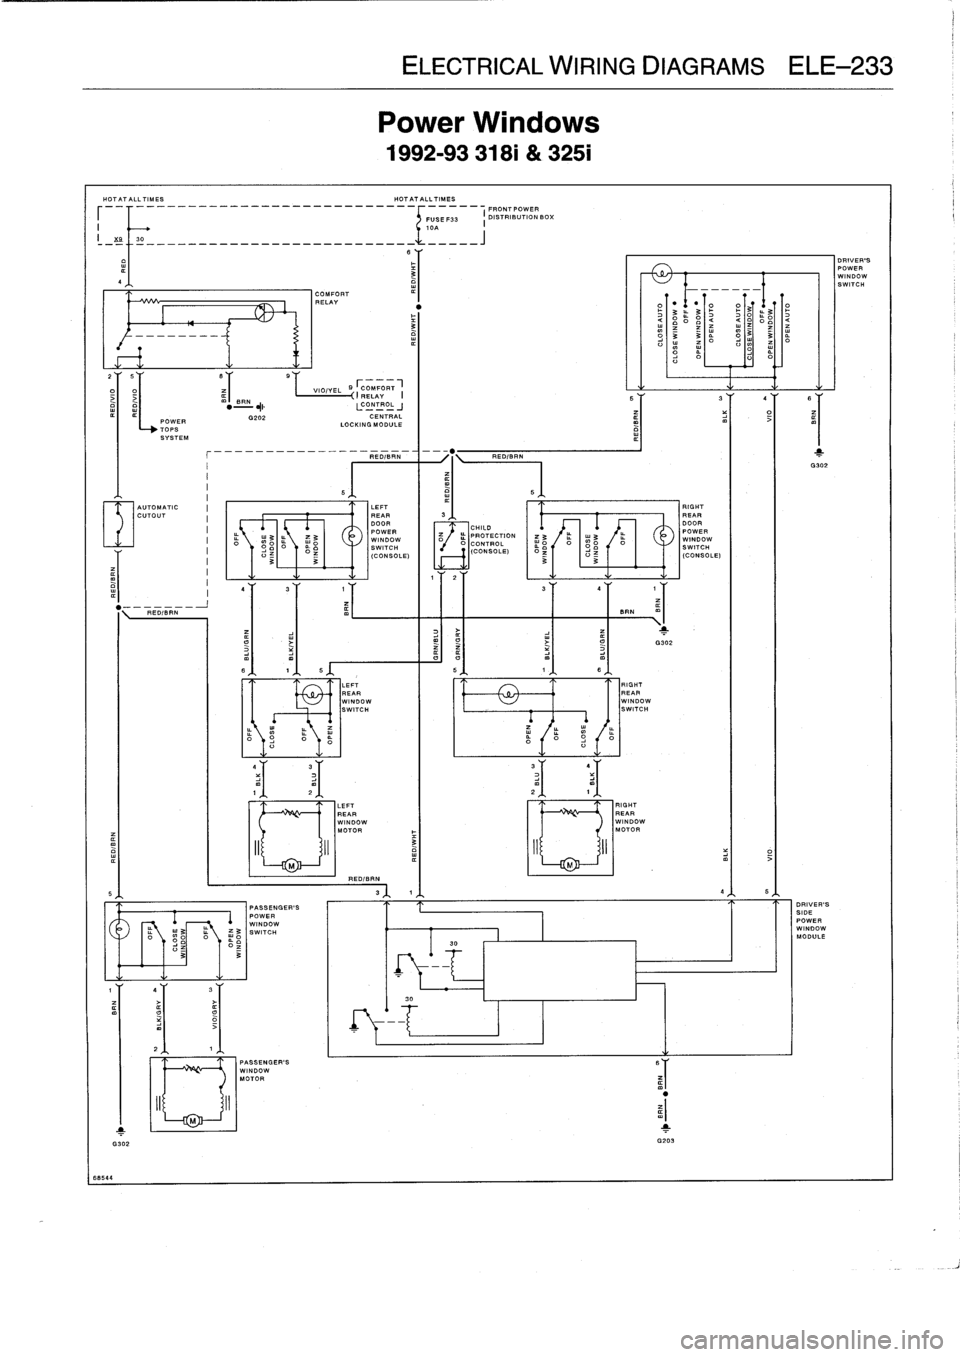 BMW 323i 1993 E36 Workshop Manual 
HO7A7AlL71ME5

	

HOTATALLTIMES

r
--

68544

i

*---AAA
POWER

AUTOMATIC
CUTOUT

O

PASSENGERS
WINDOWMOTOR

V
1
G3D2

B
r
COMFDRT~
VIOIYEL
(IRELAY
I

ELECTRICAL
WIRING
DIAGRAMS
ELE-233

Power
Windo